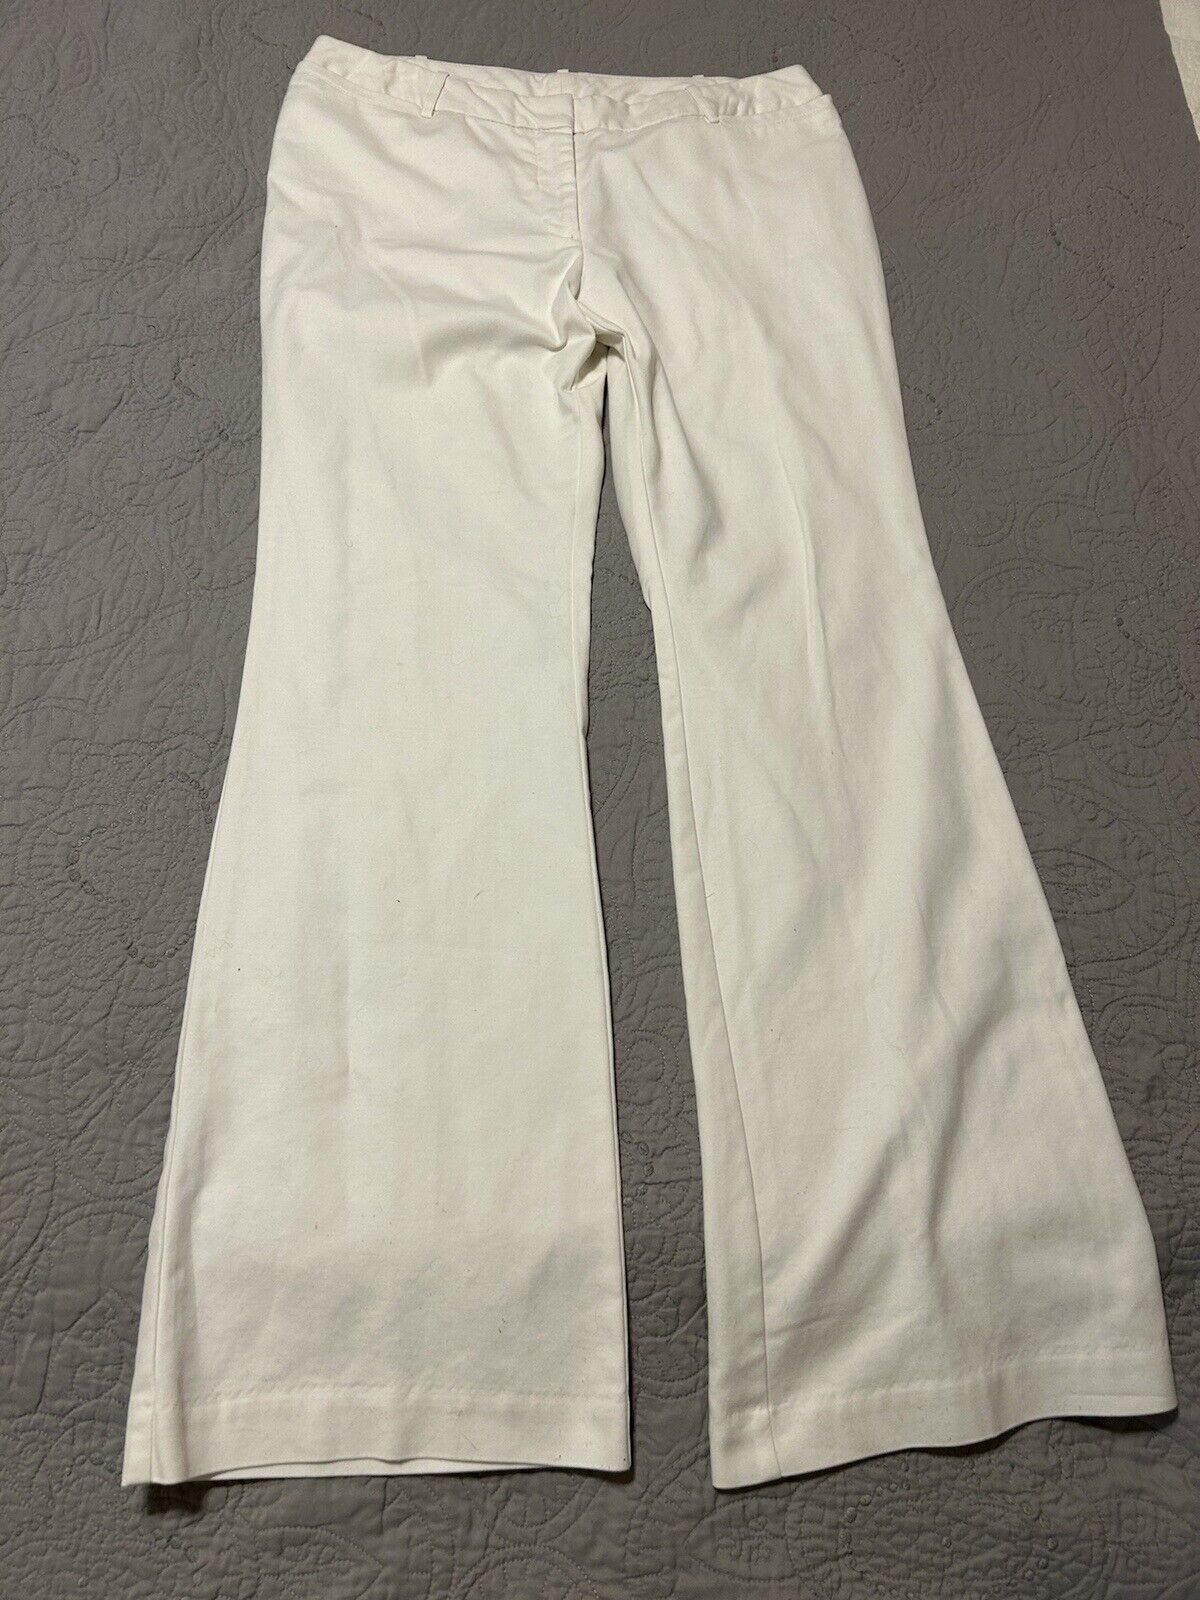 Worthington Women\'s Curvy Fit Size 14 Slacks Trousers Wide Leg White 32” Inseam